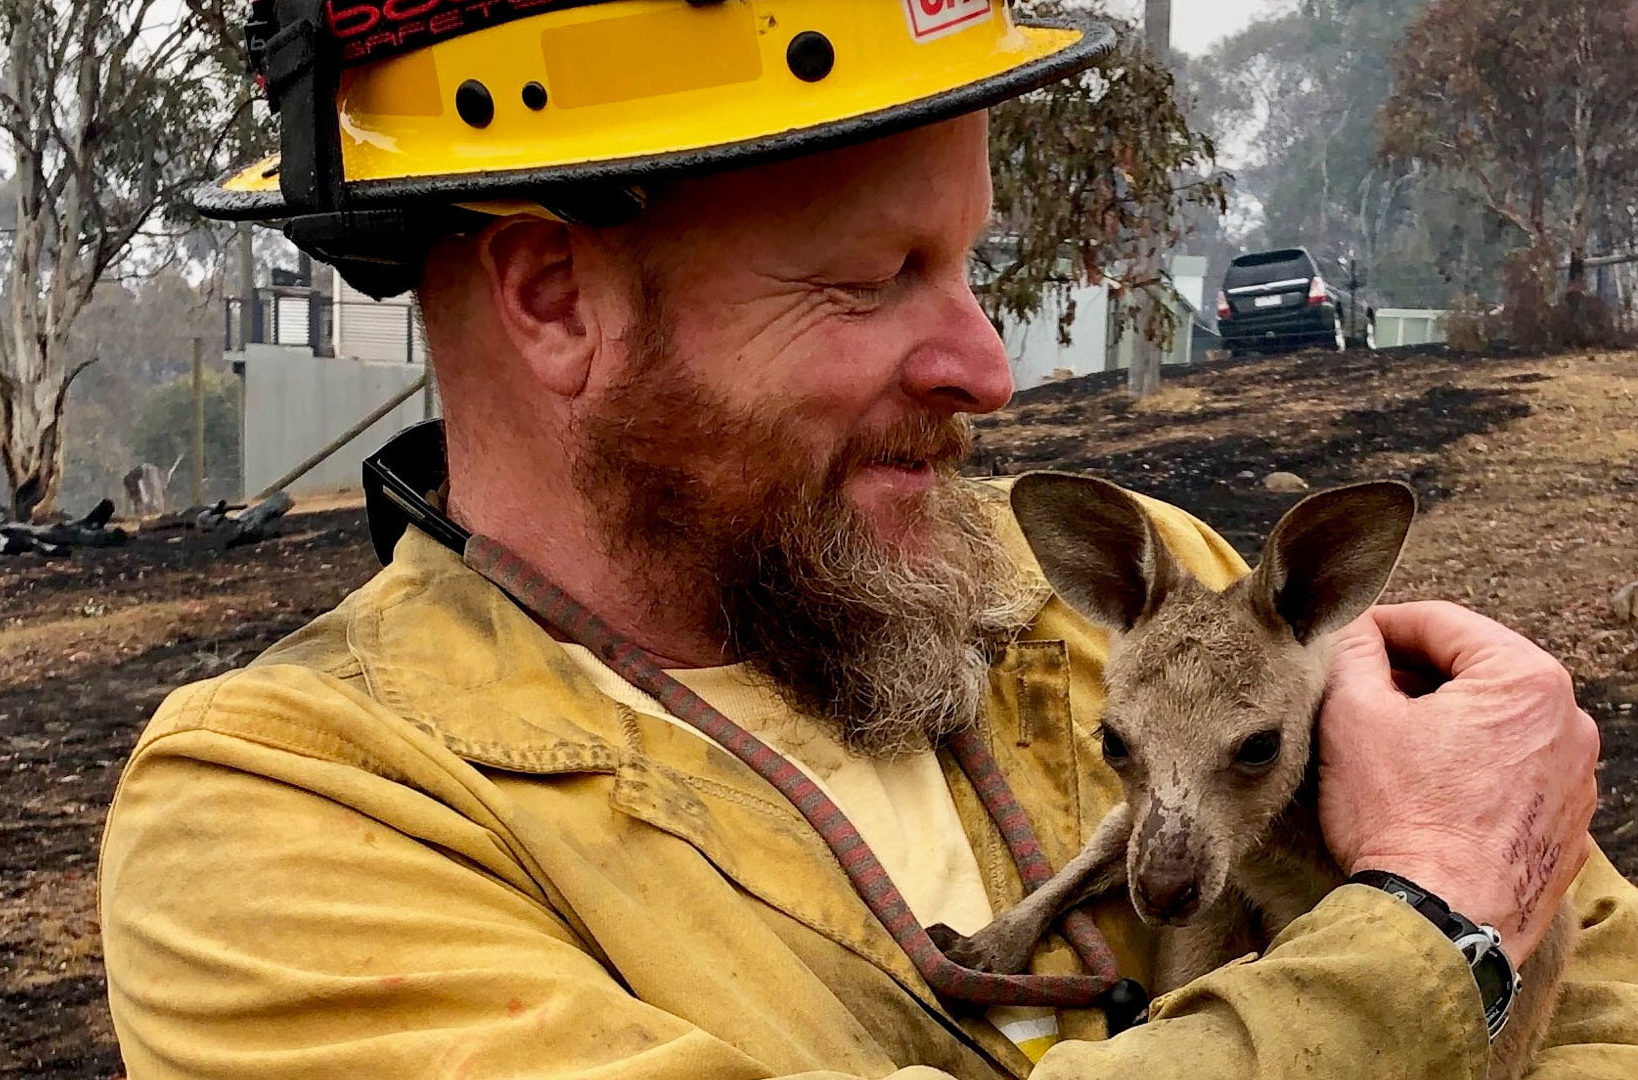 Firefighter Dave Soldavini cradles a baby kangaroo rescued from blazes in southeast Australia